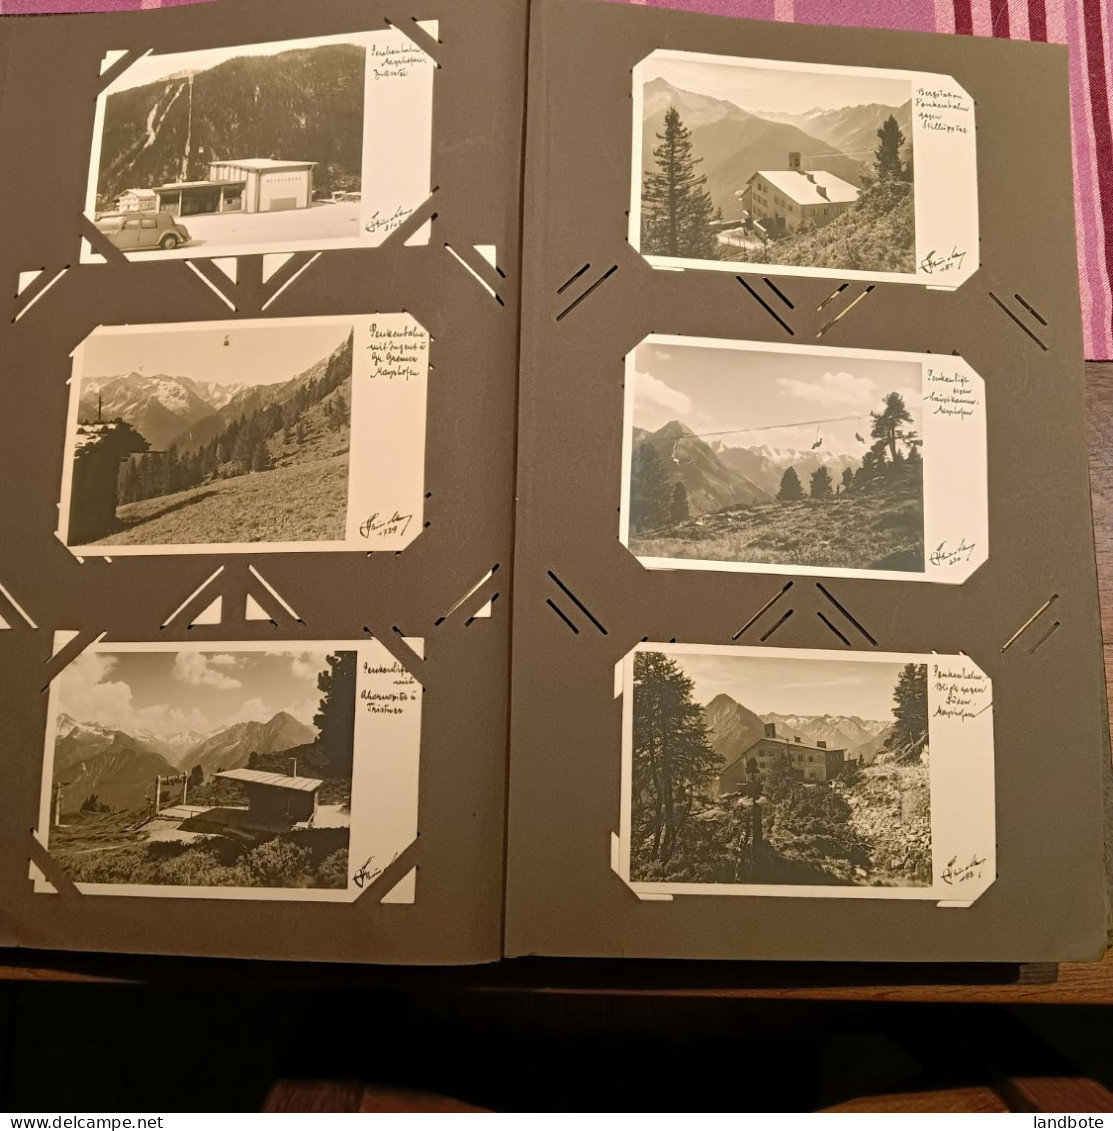 Ansichtskartenalbum mit 287 Ansichten aus dem Zillertal - Mayrhofen - Zell am Ziller - Hintertux ...